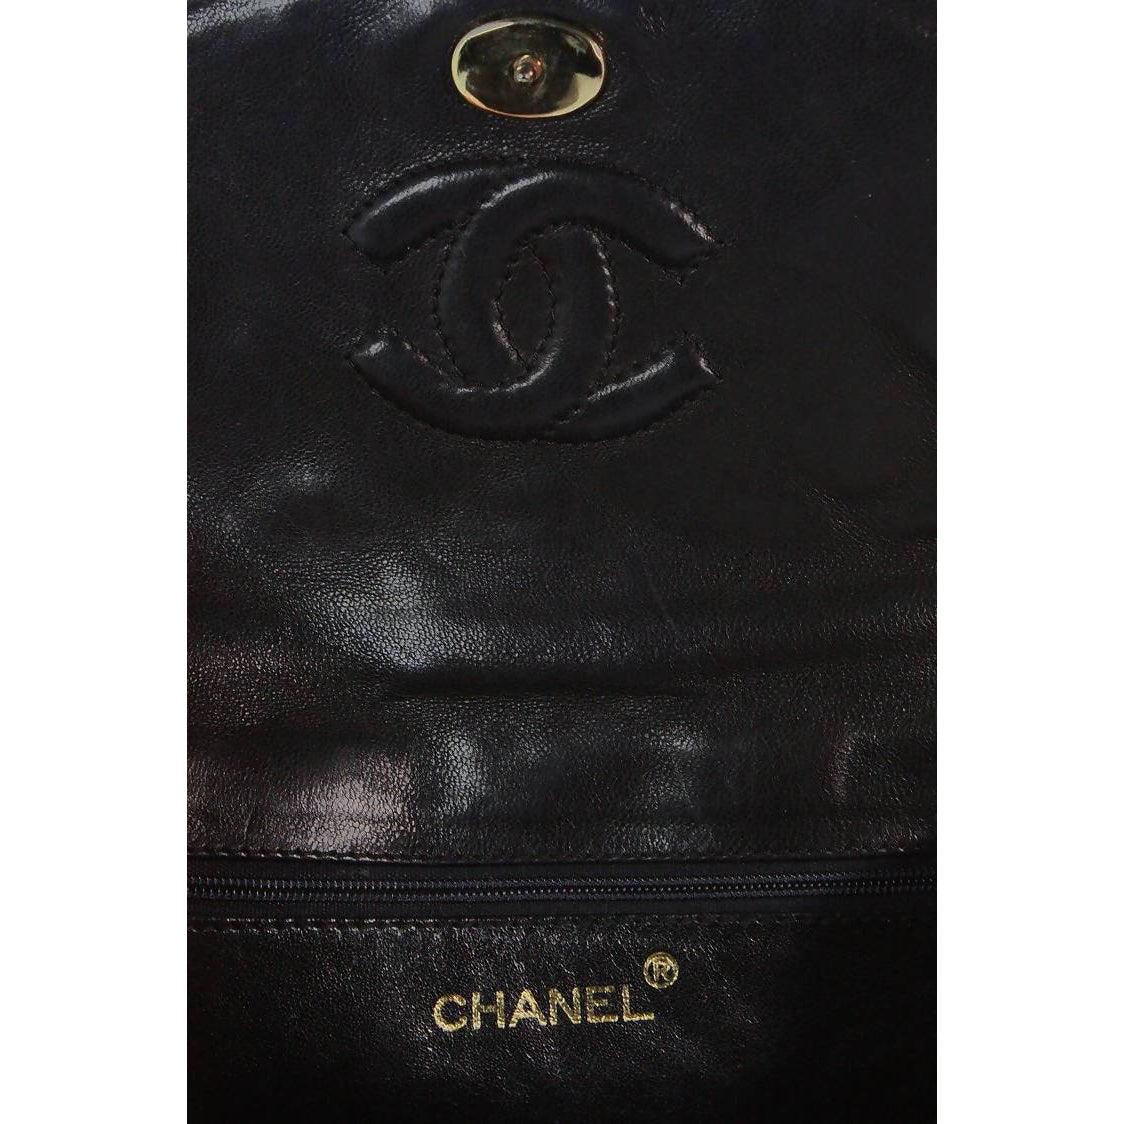 chanel clear handbags